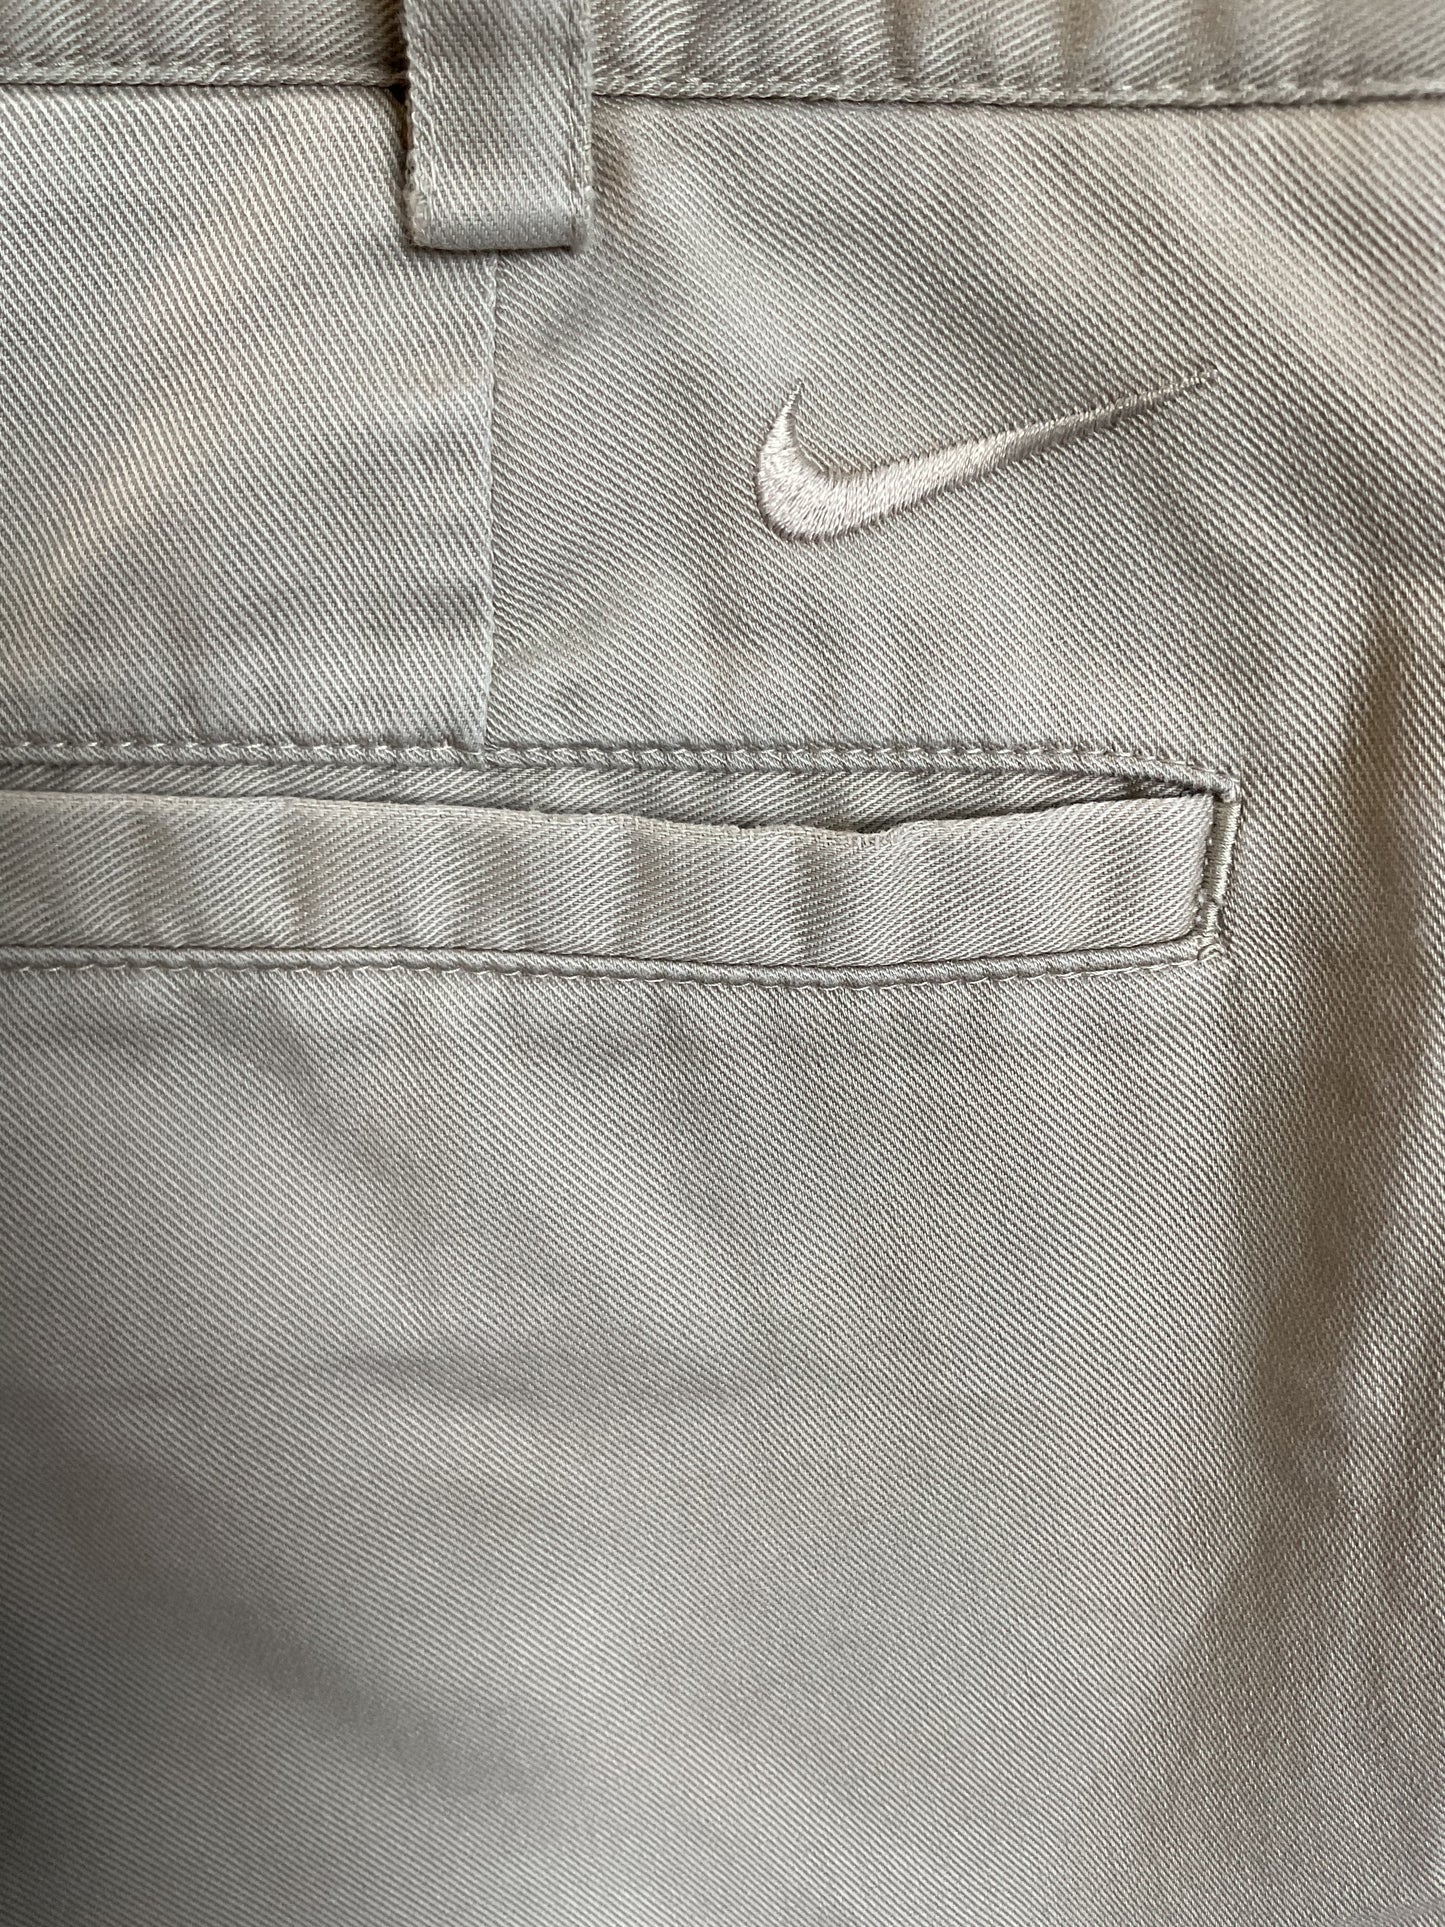 Men’s Nike Golf Pleated Shorts Size 32W